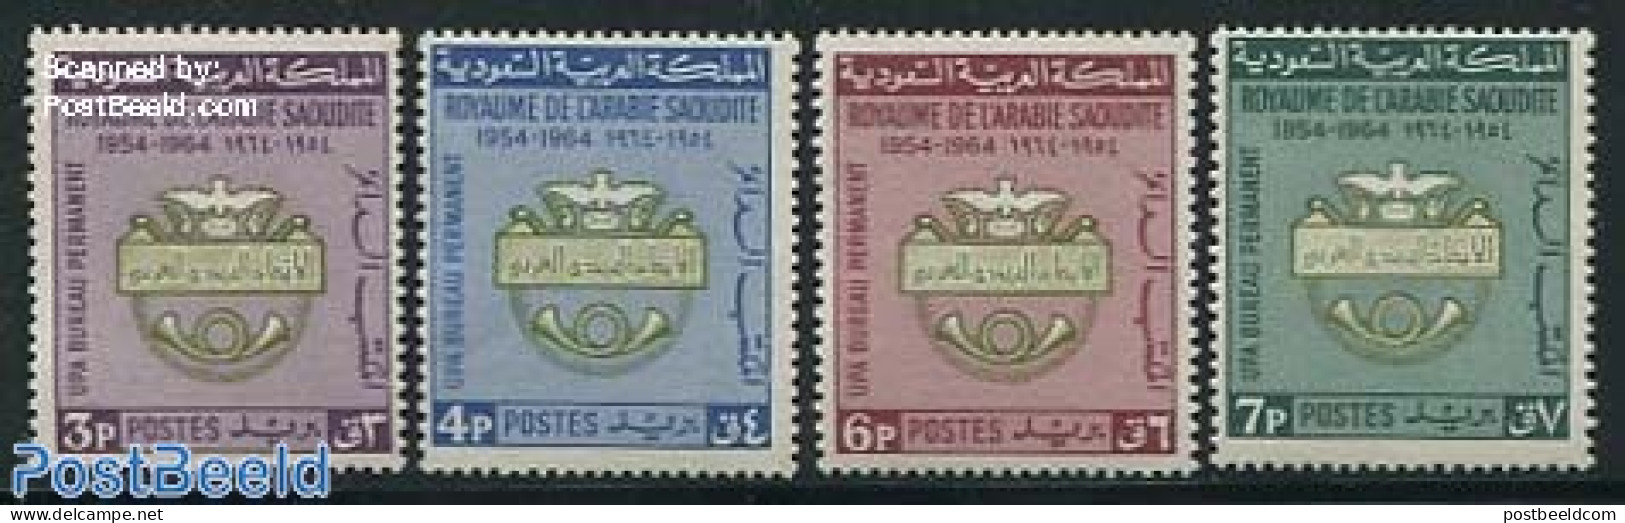 Saudi Arabia 1966 Arab Postal Union 10th Anniversary 4v, Mint NH, Post - Correo Postal